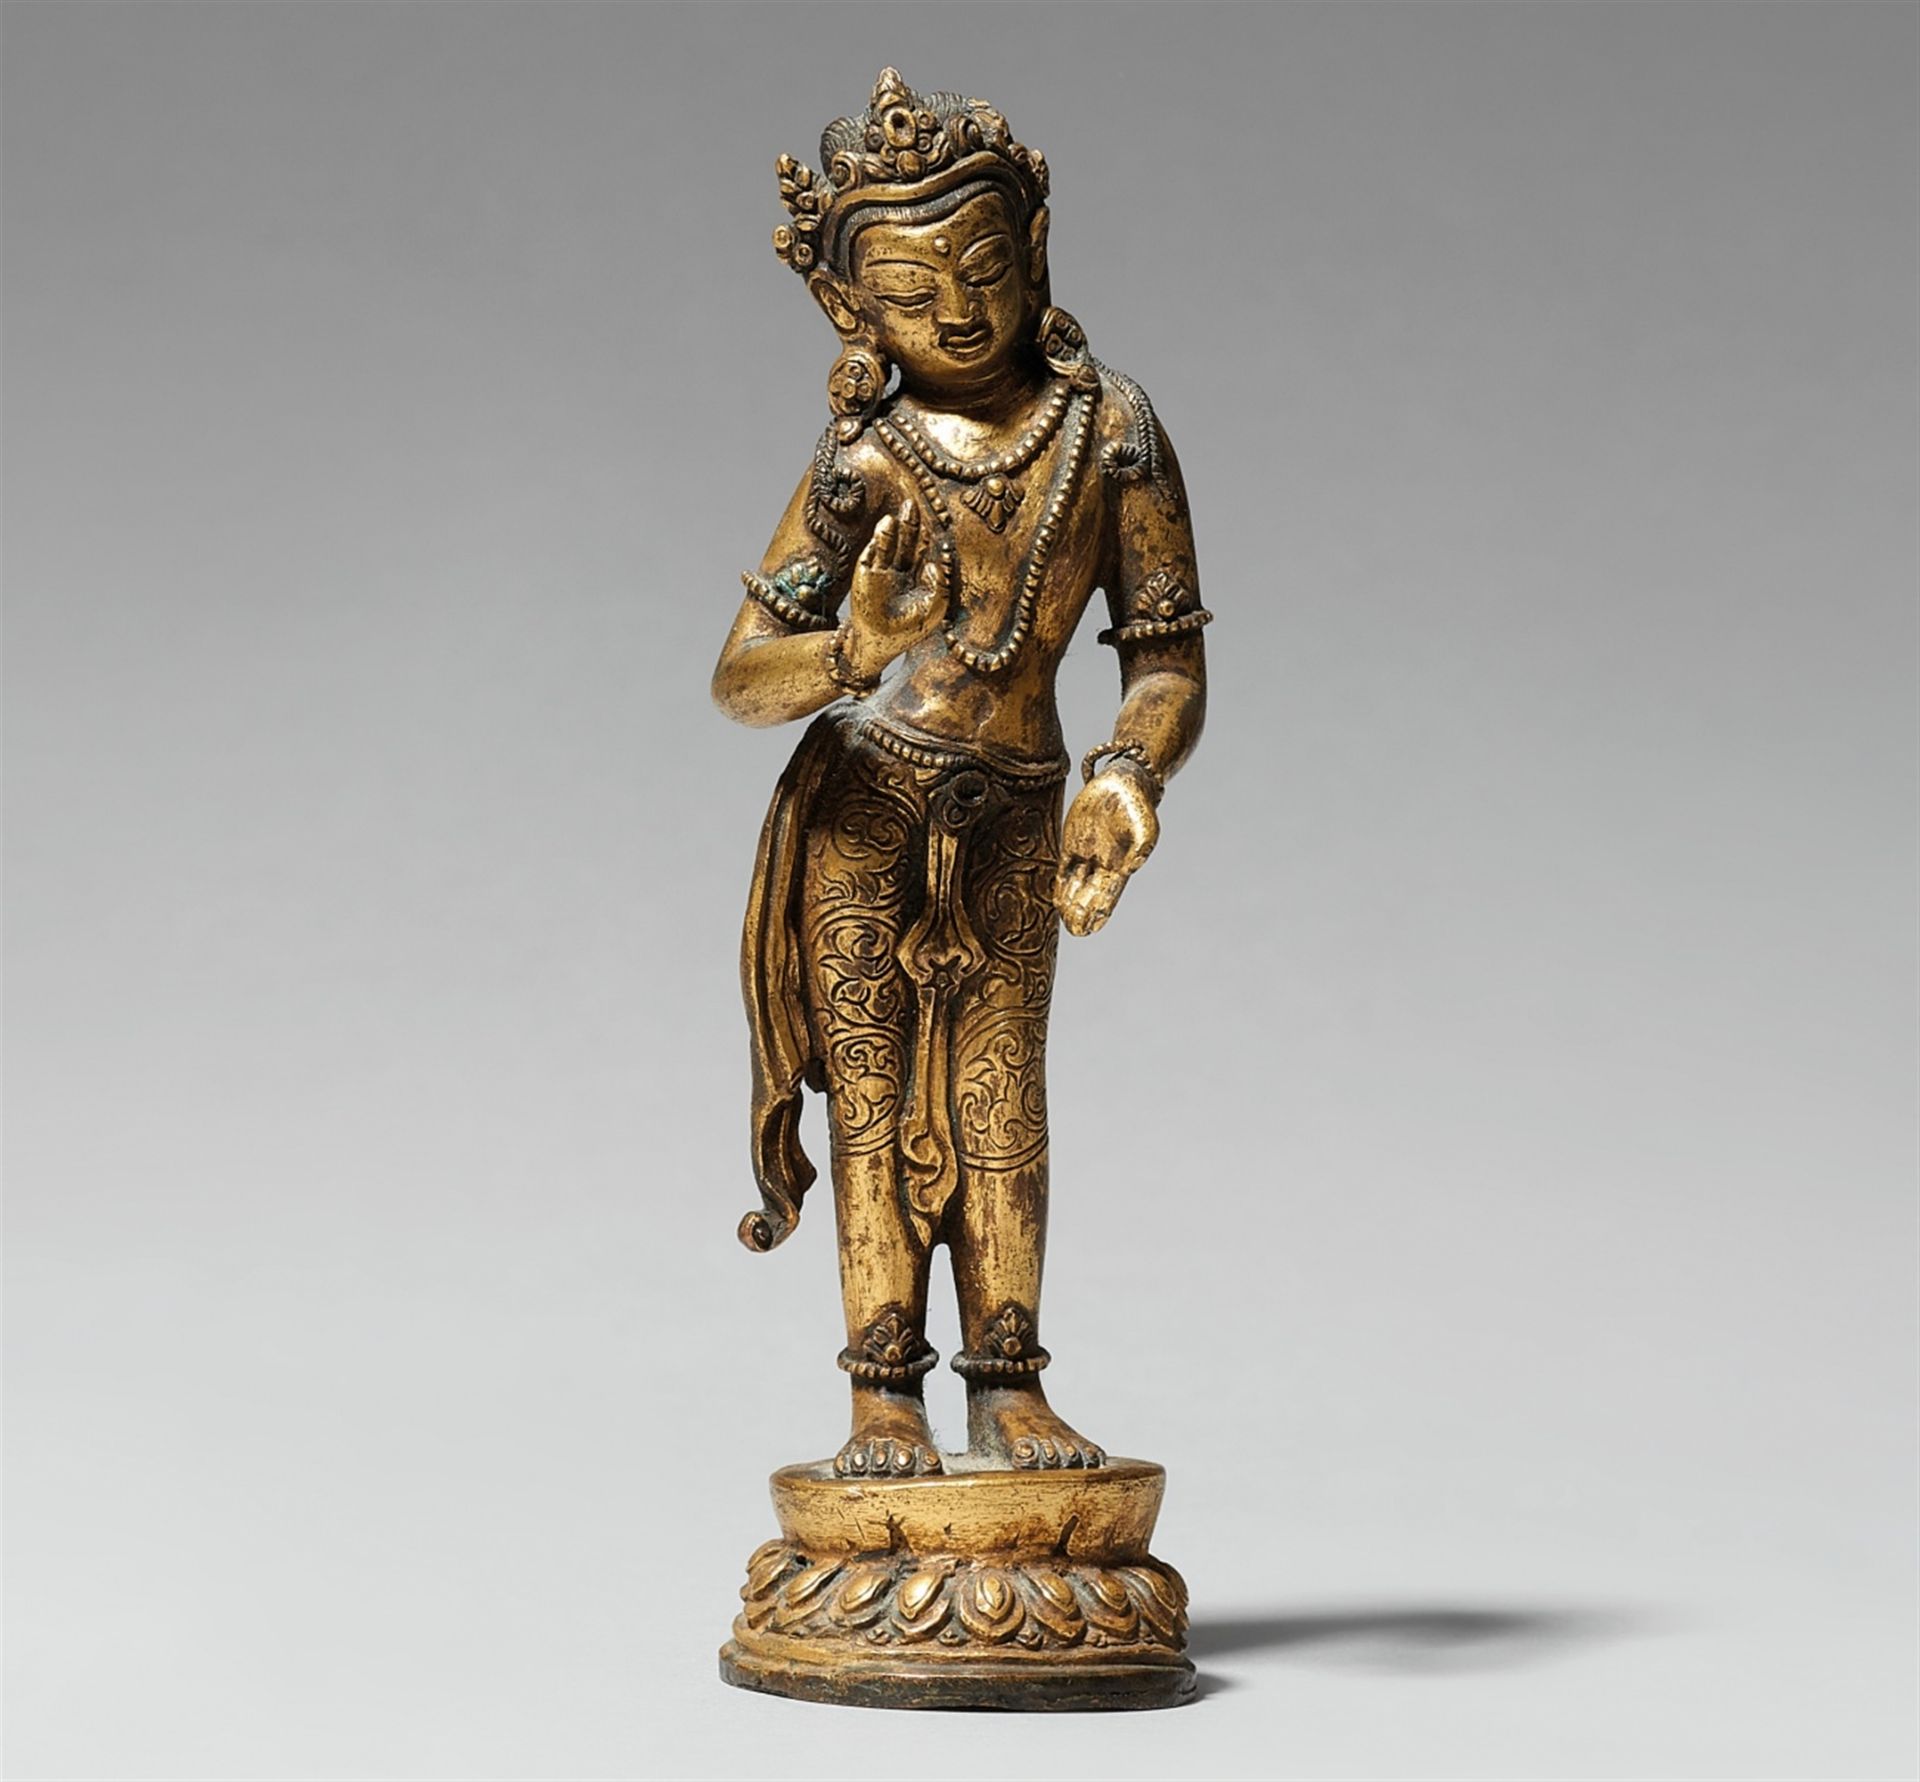 Stehender Bodhisattva. Feuervergoldete Bronze. Nepal. 17./18. Jh.